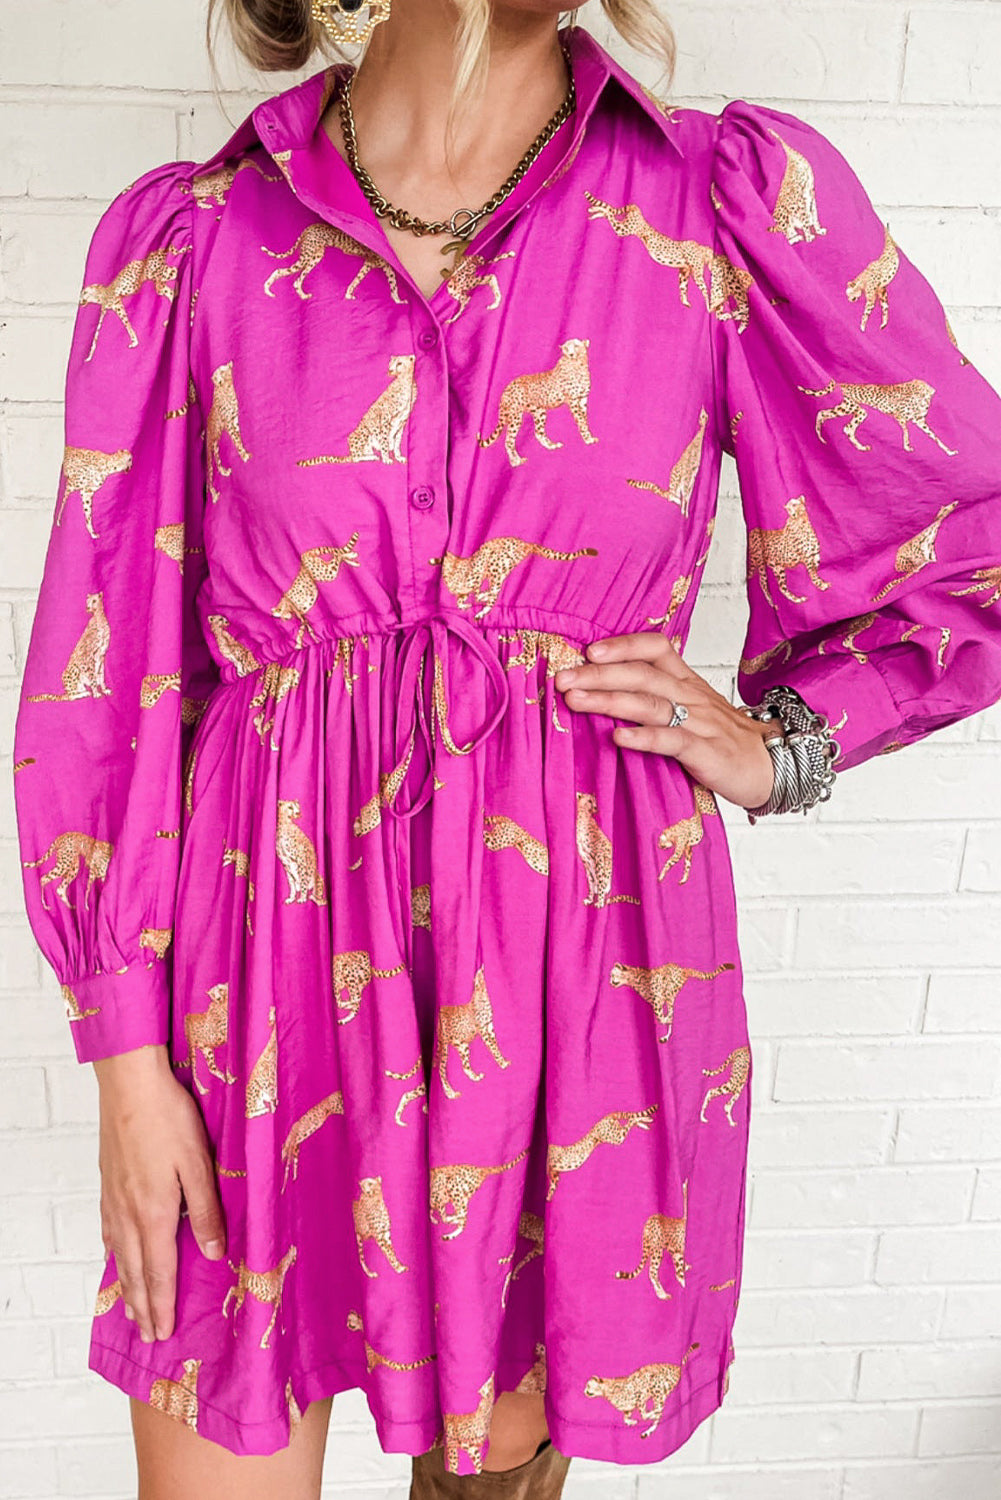 Rose Cheetah Print Side Pockets Drawstring Mini Shirt Dress